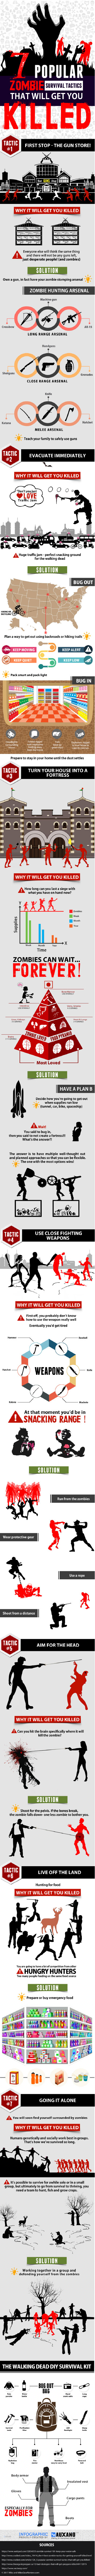 ZombiesInfographic-7-popular-zombie-survival-tactics